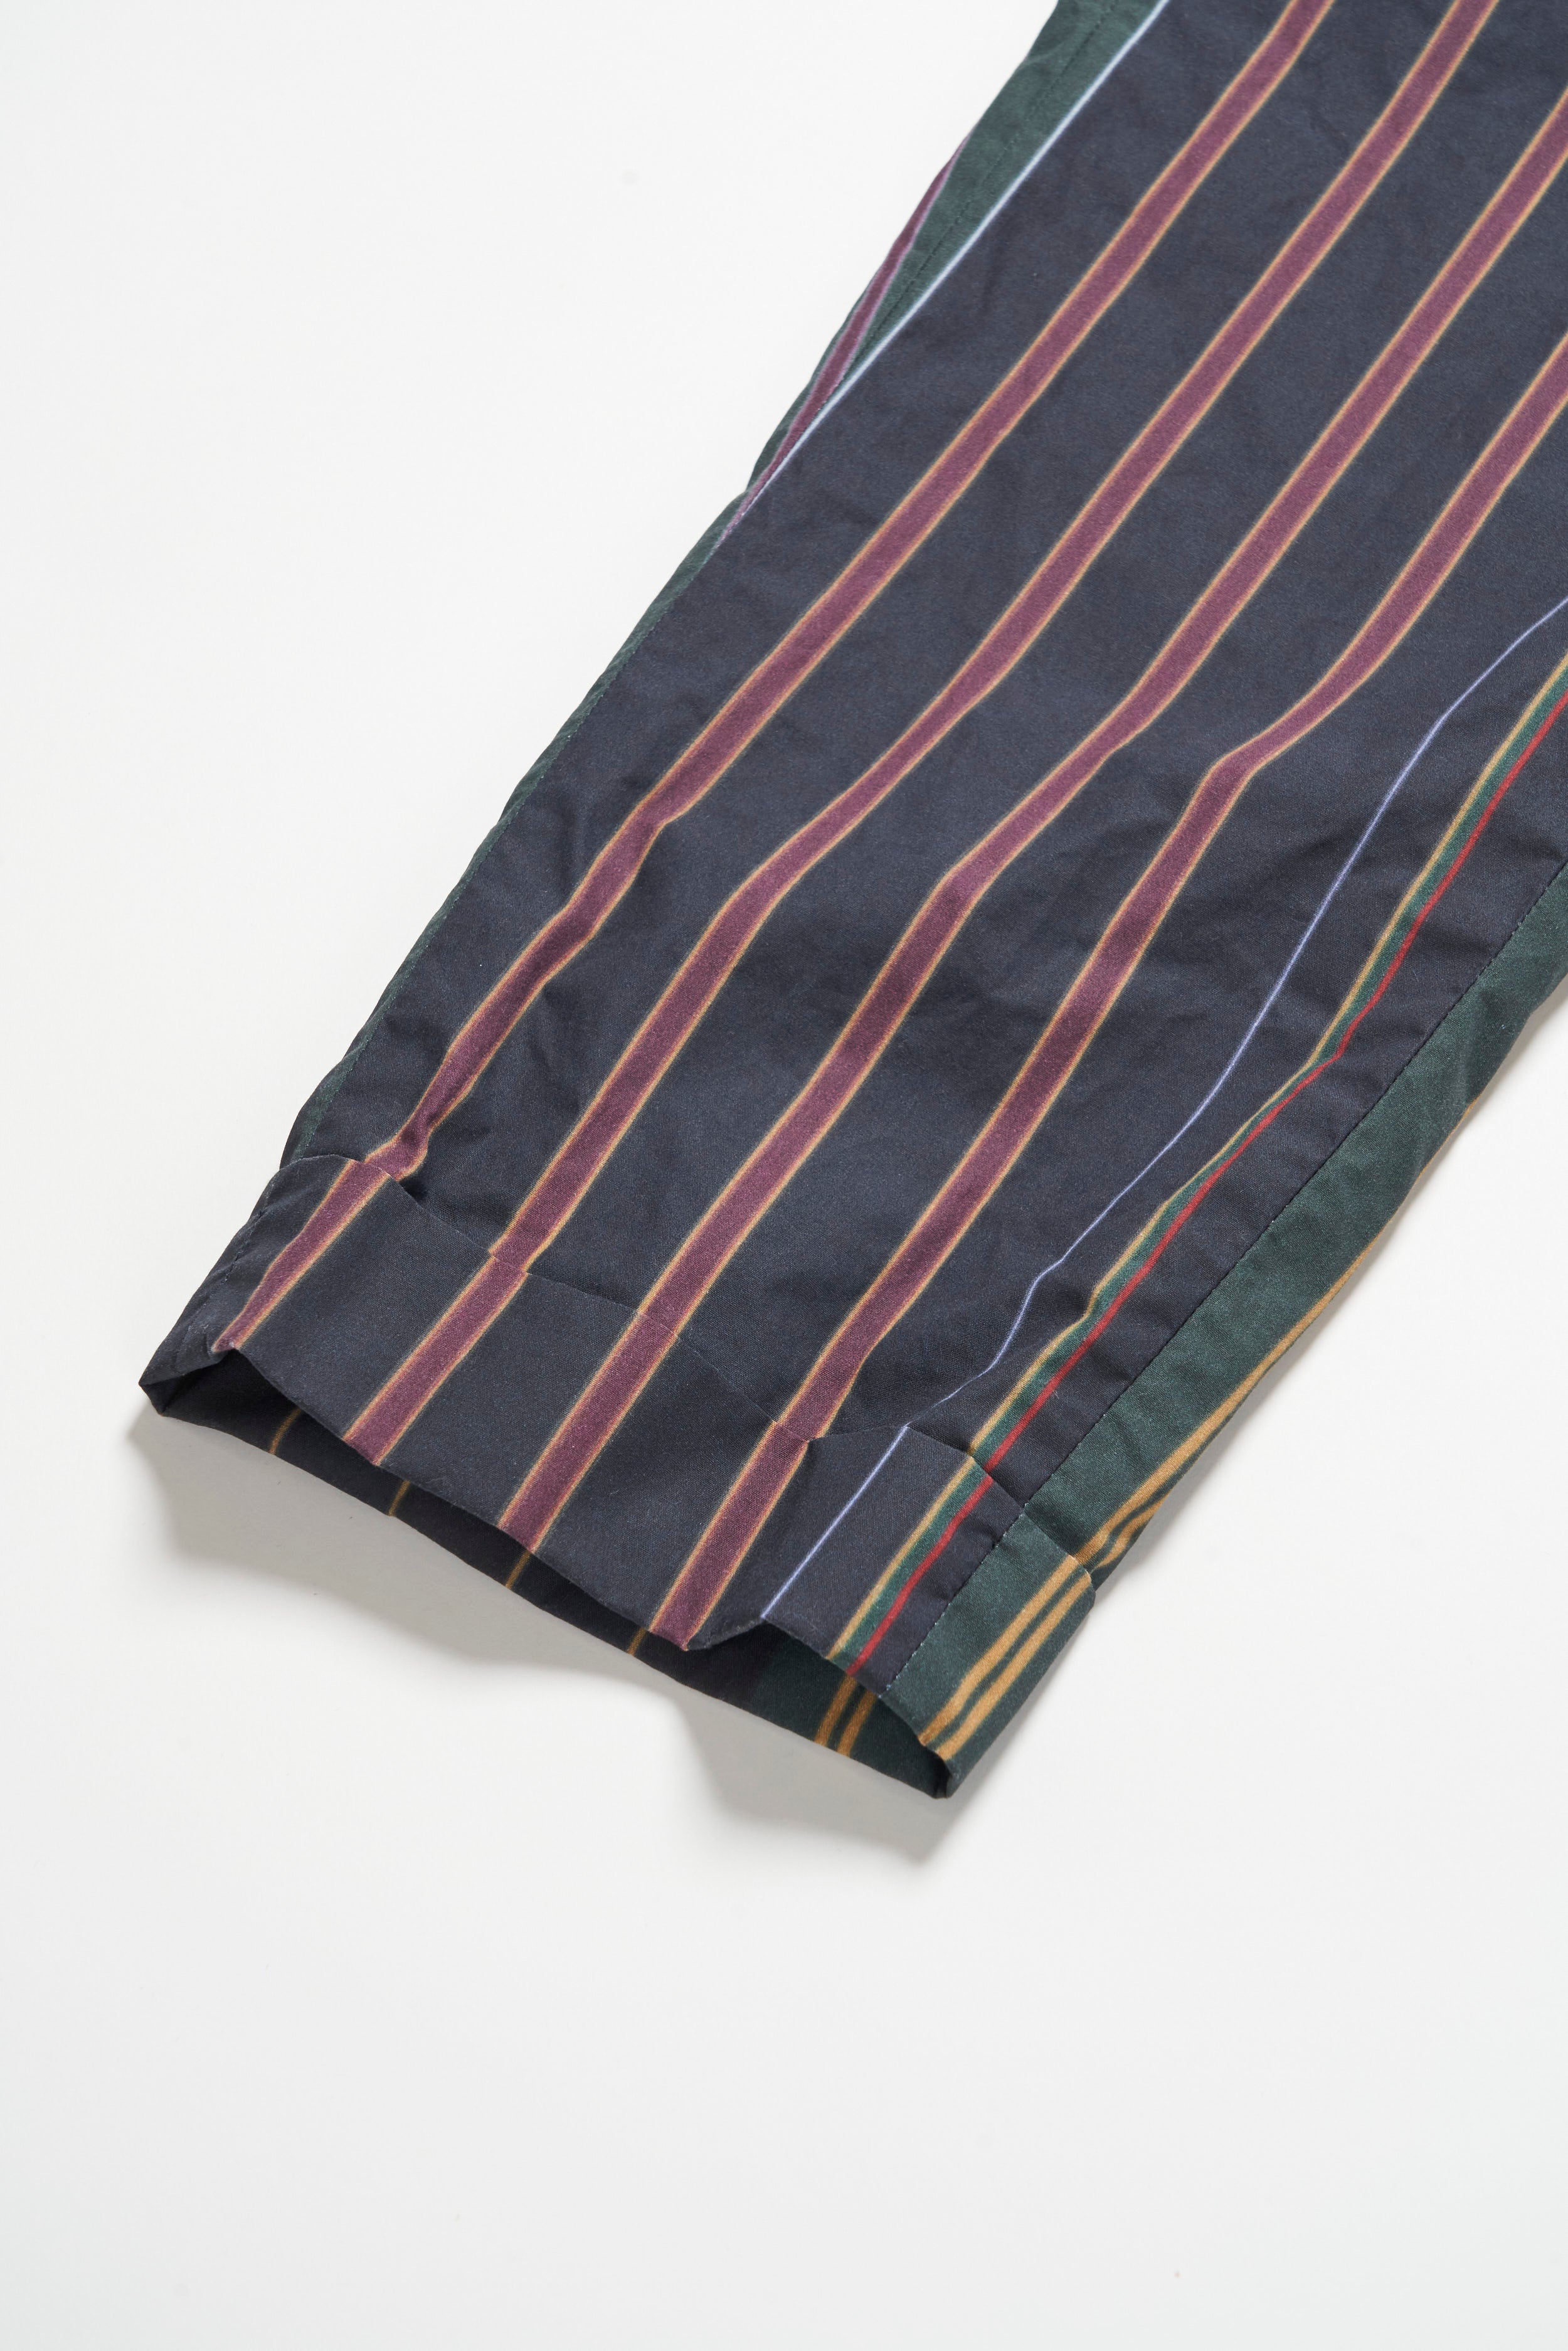 Andover Pant - Multi Color Regimental Stripe